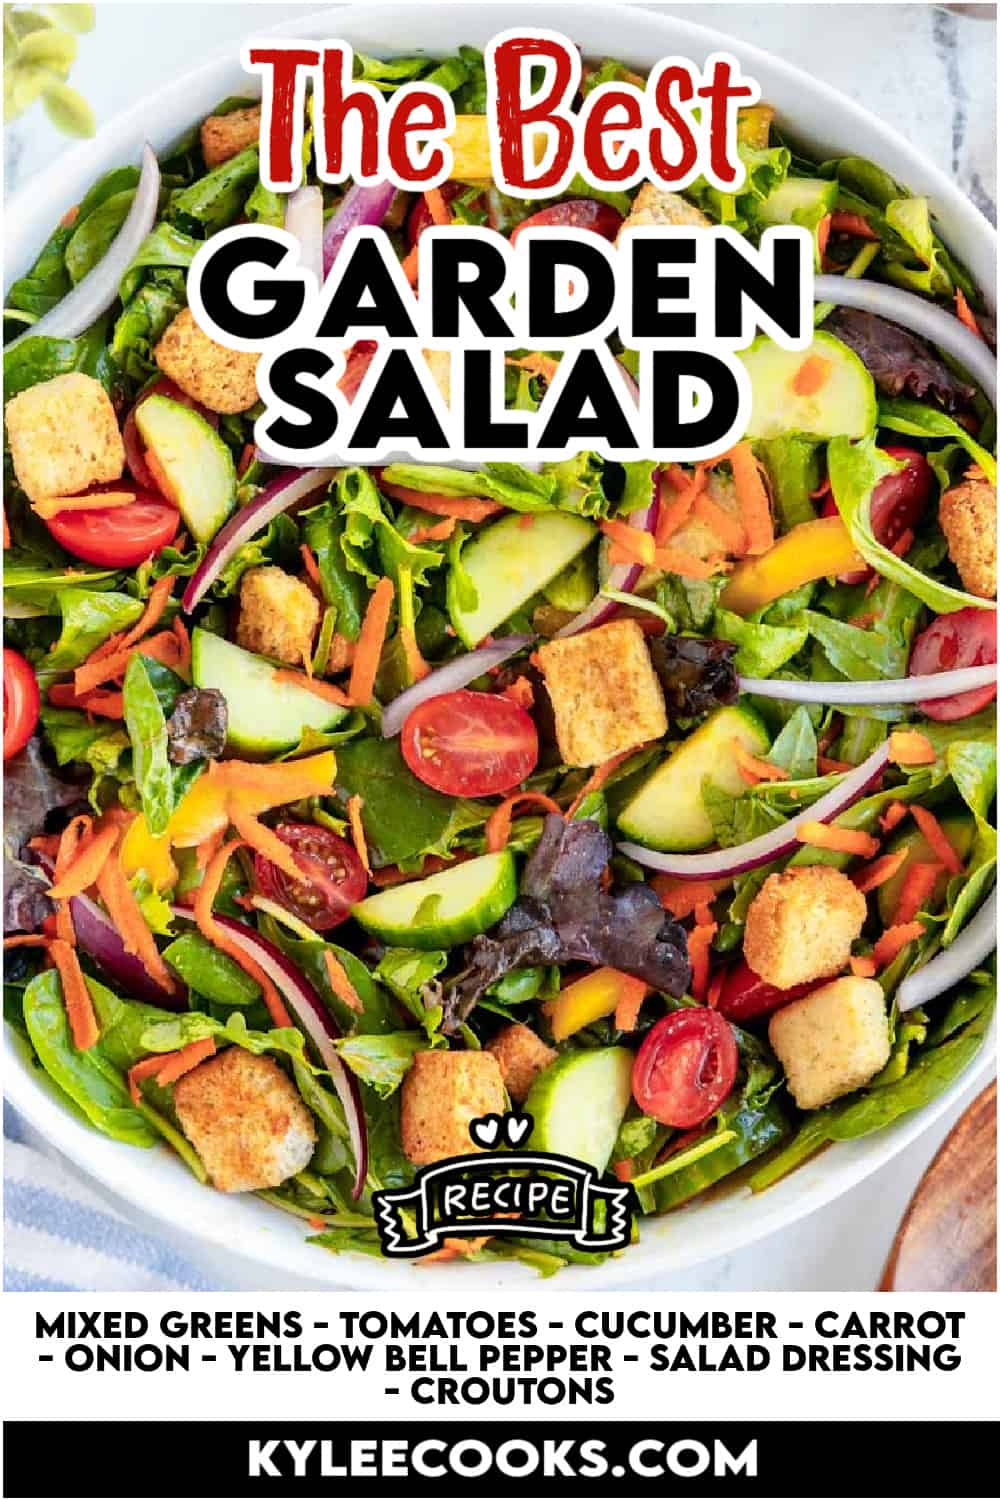 Garden salad with "the best garden salad" overlaid in text.